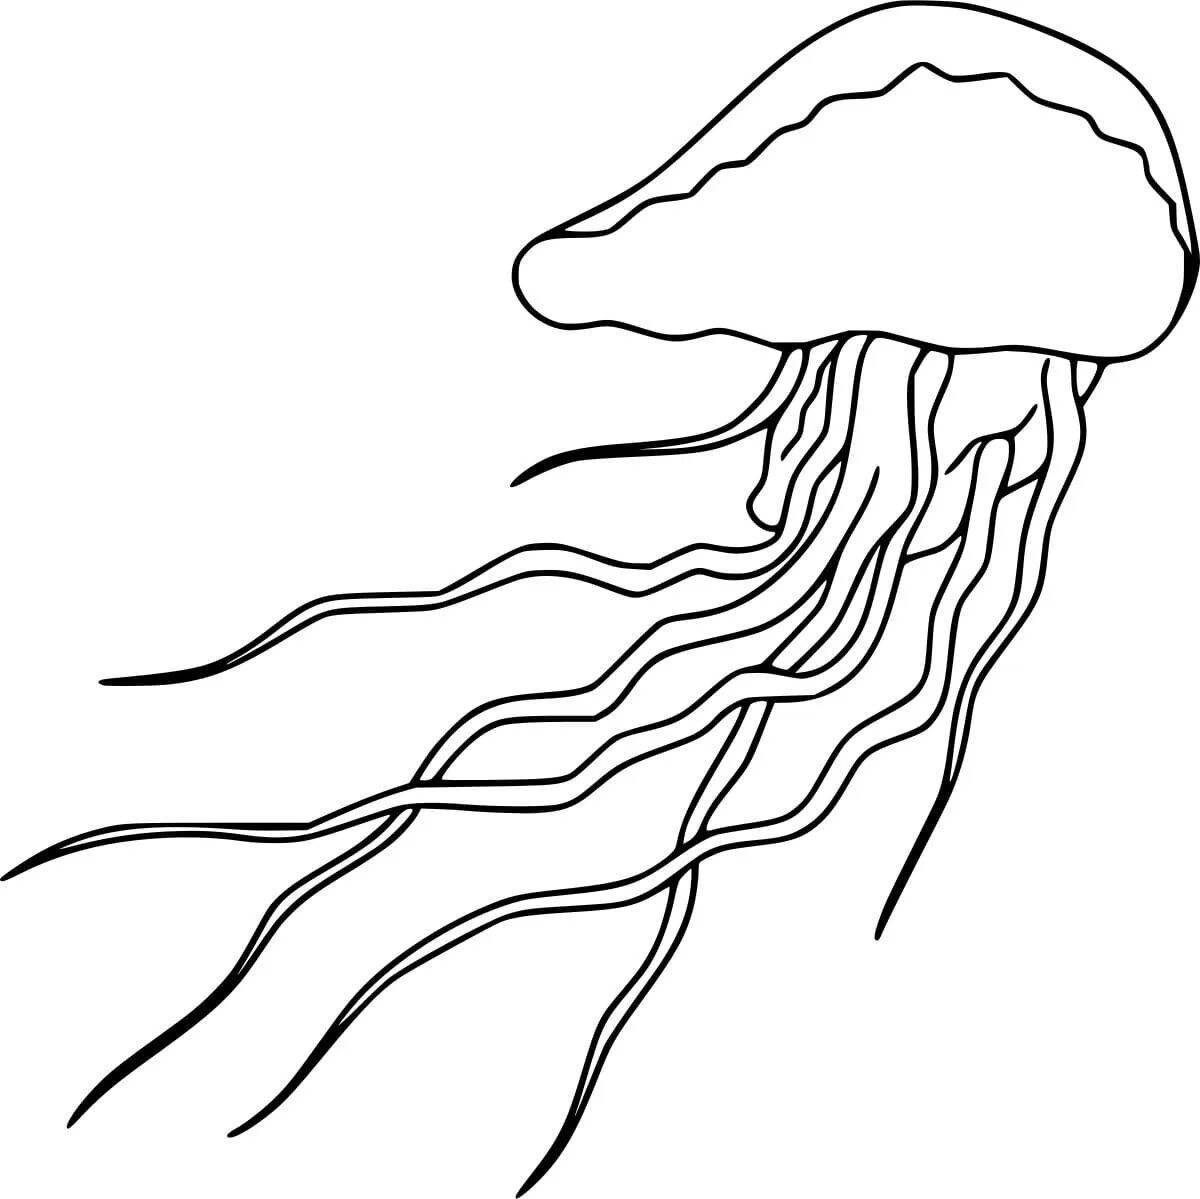 Magic jellyfish coloring book for kids